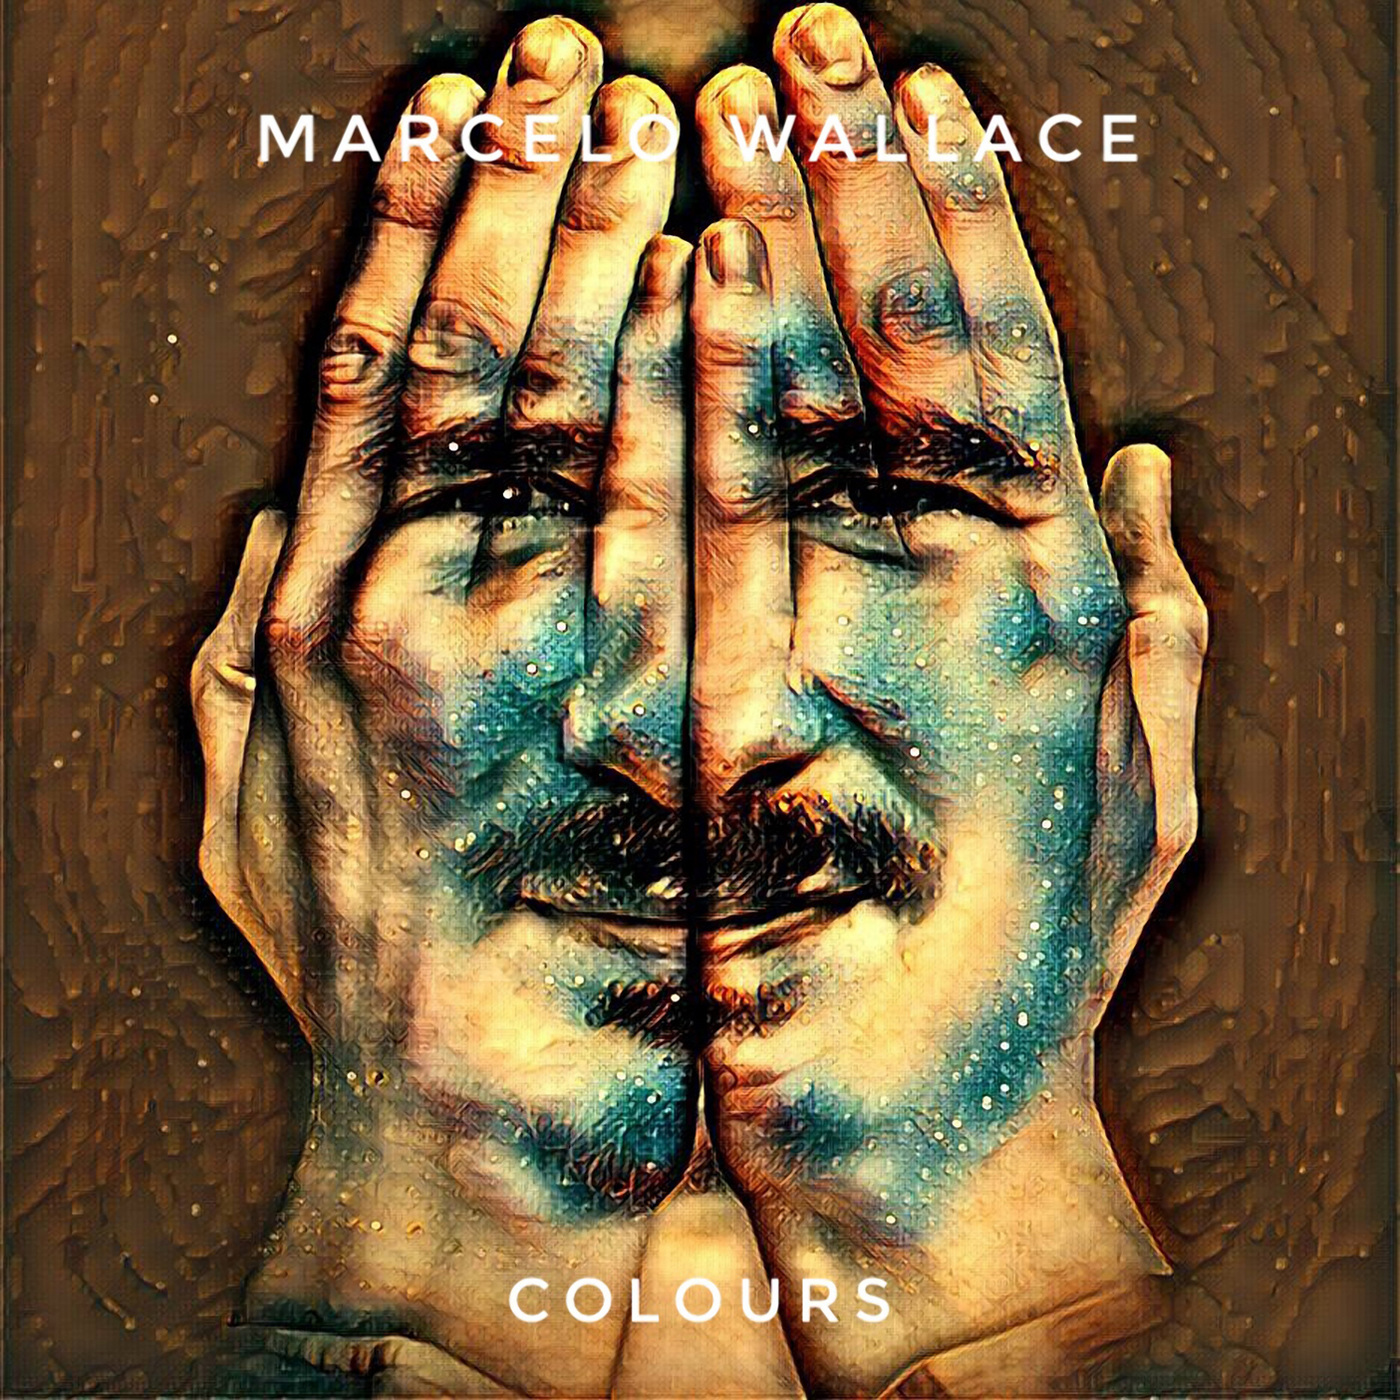 Marcelo Wallace - Colours / An5oul Tracks